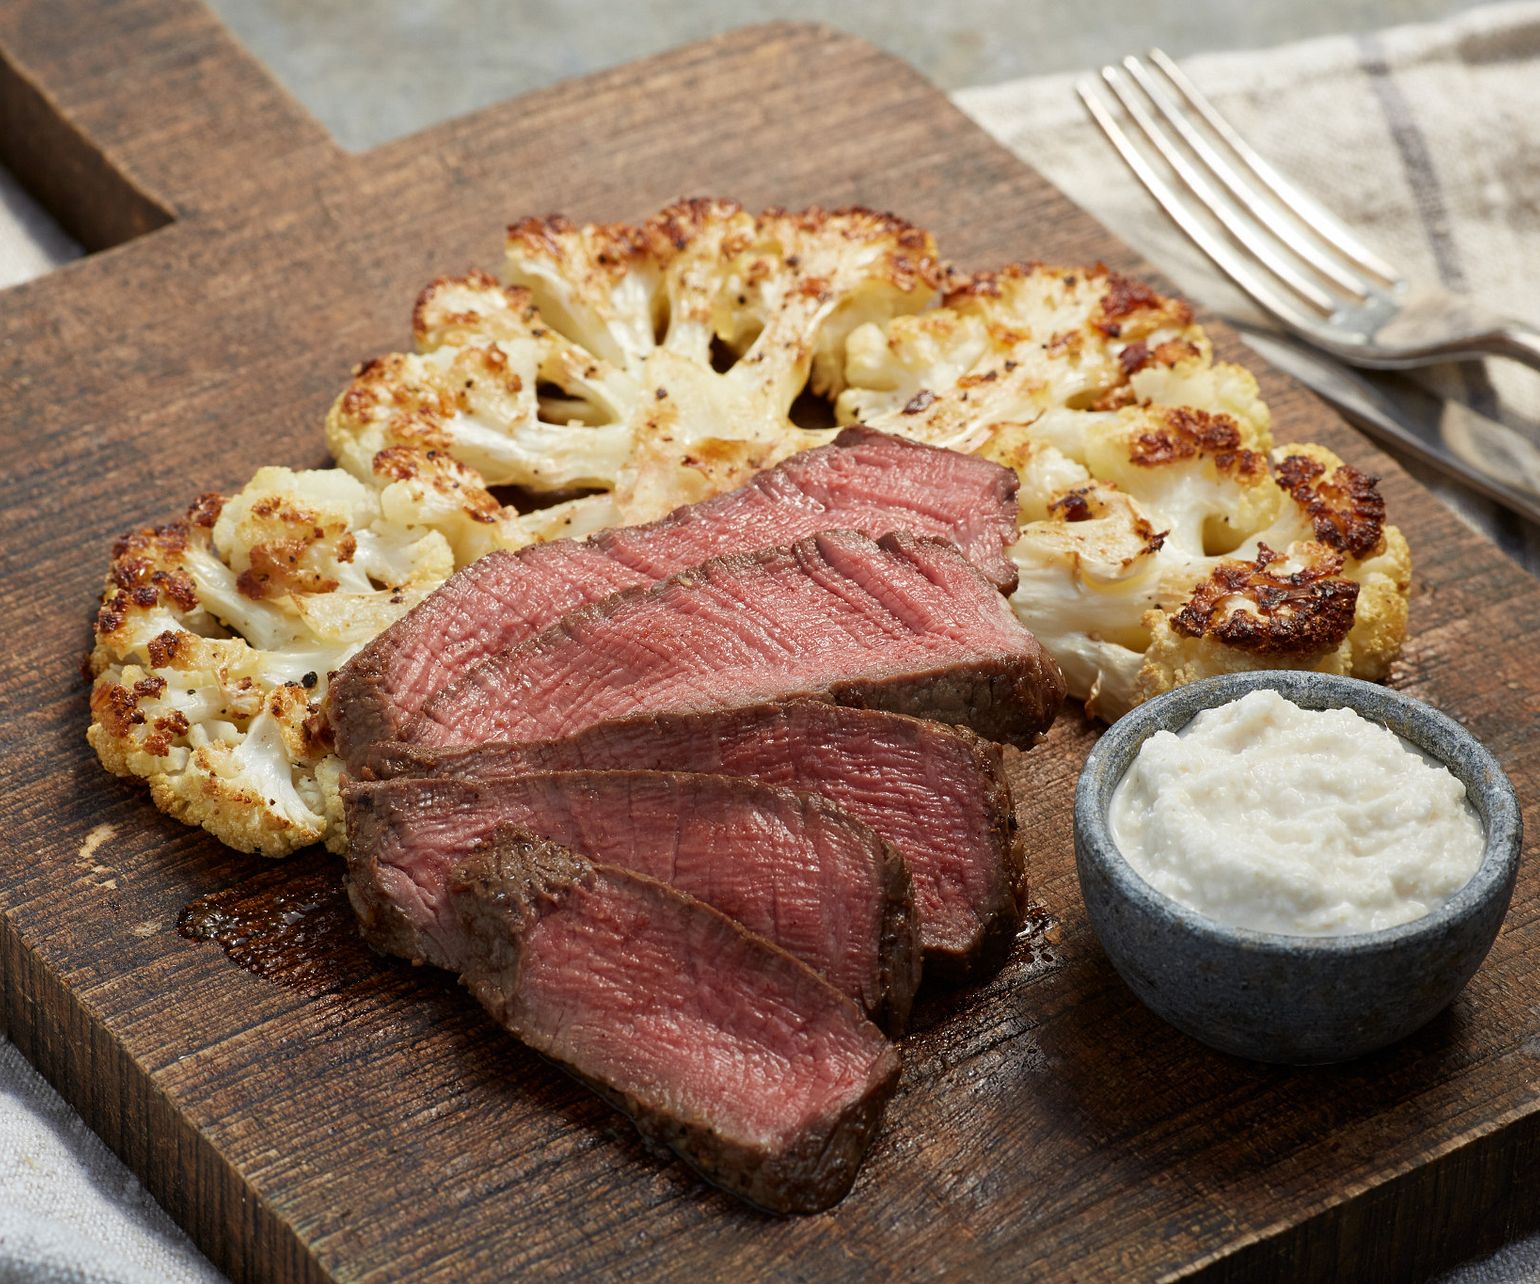 Beef Tenderloin with Roasted Cauliflower “Steak”